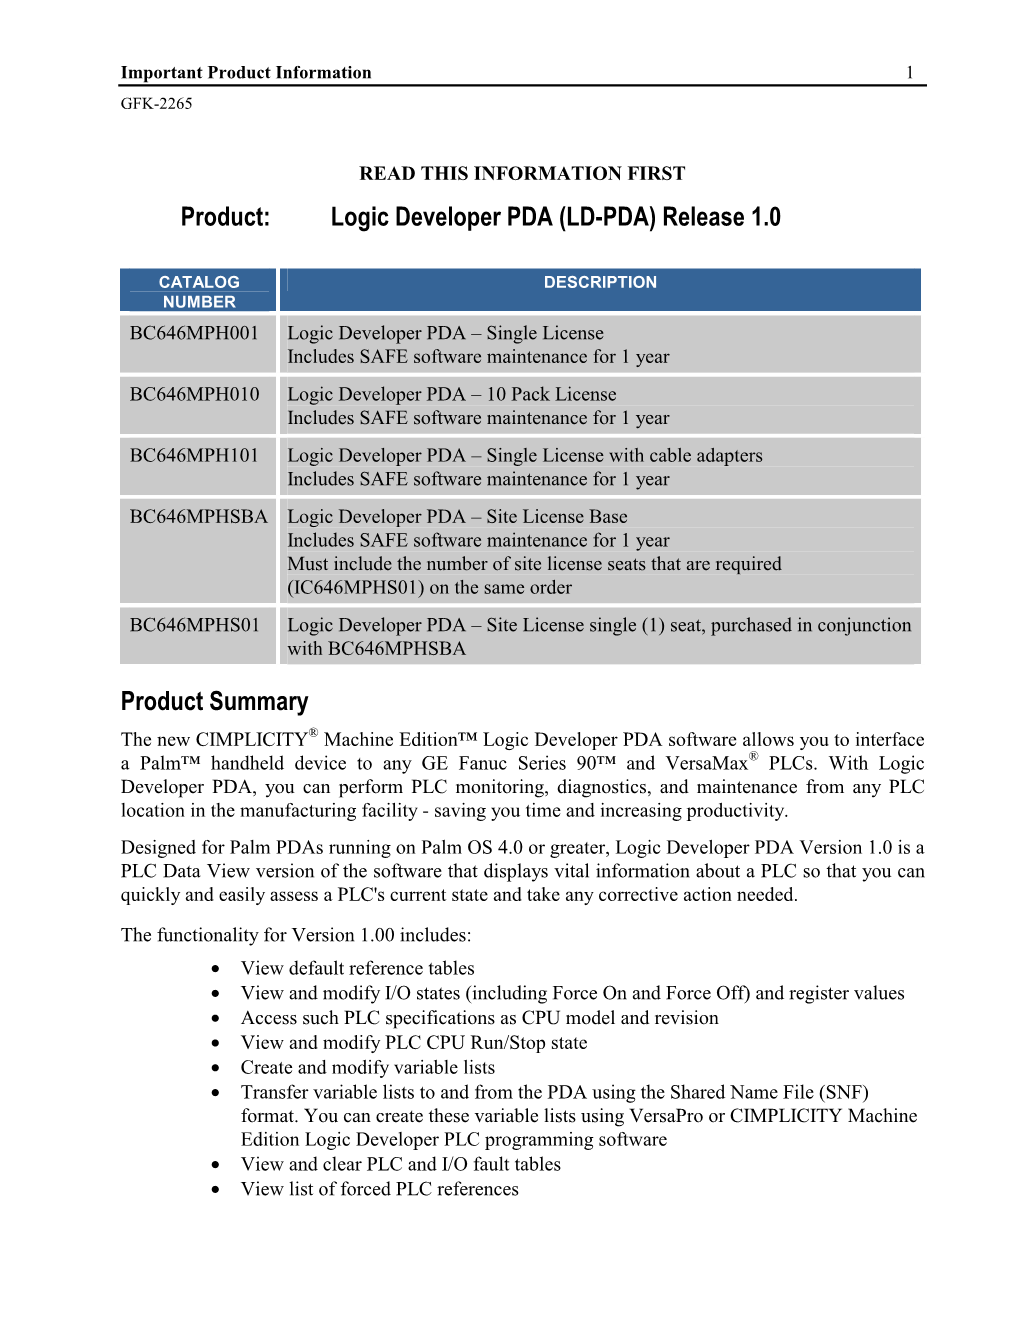 Logic Developer PDA Software, V1.0 IPI, GFK-2265